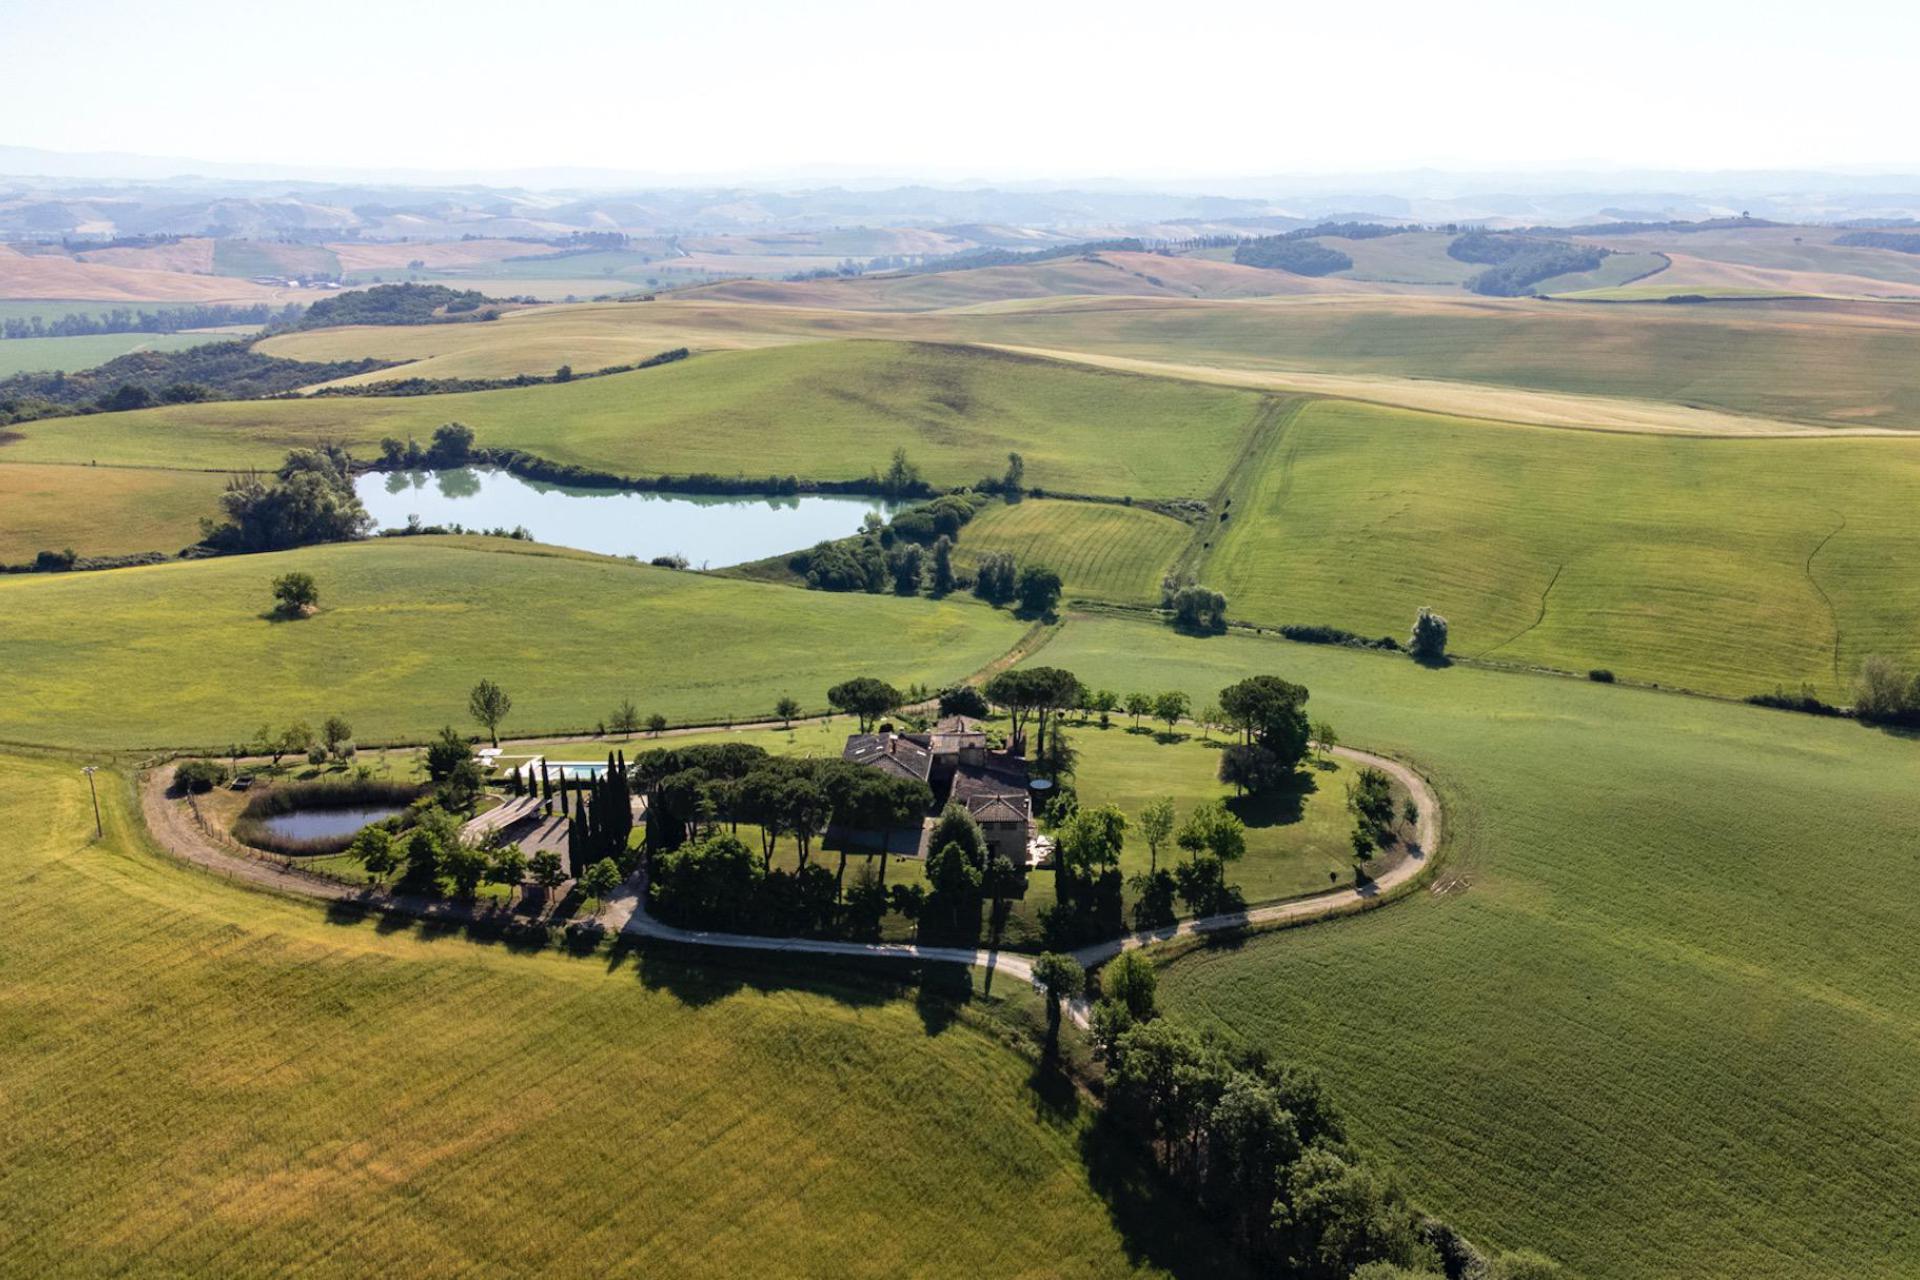 Agriturismo Toscana Agriturismo in zona tranquilla in Toscana, bella vista